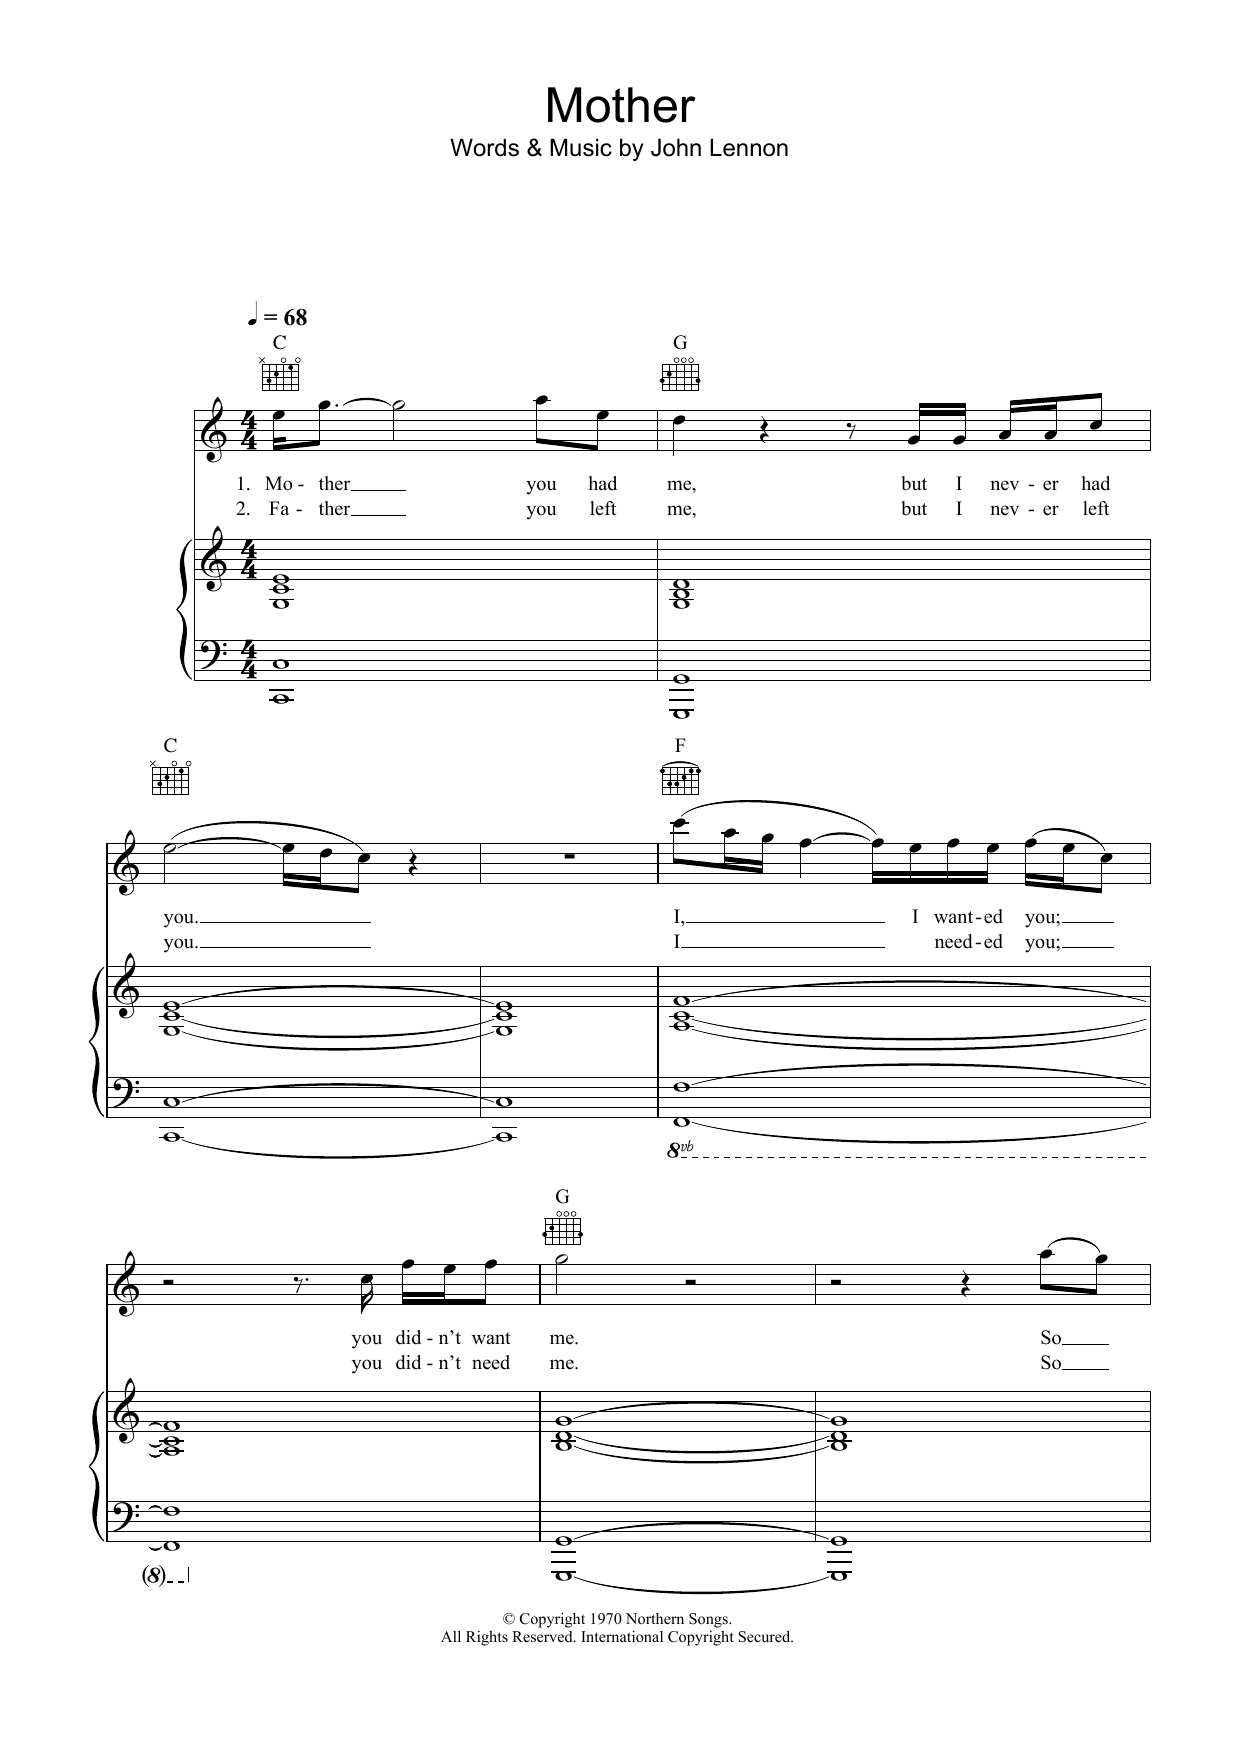 John Lennon Mother Sheet Music Notes & Chords for Melody Line, Lyrics & Chords - Download or Print PDF